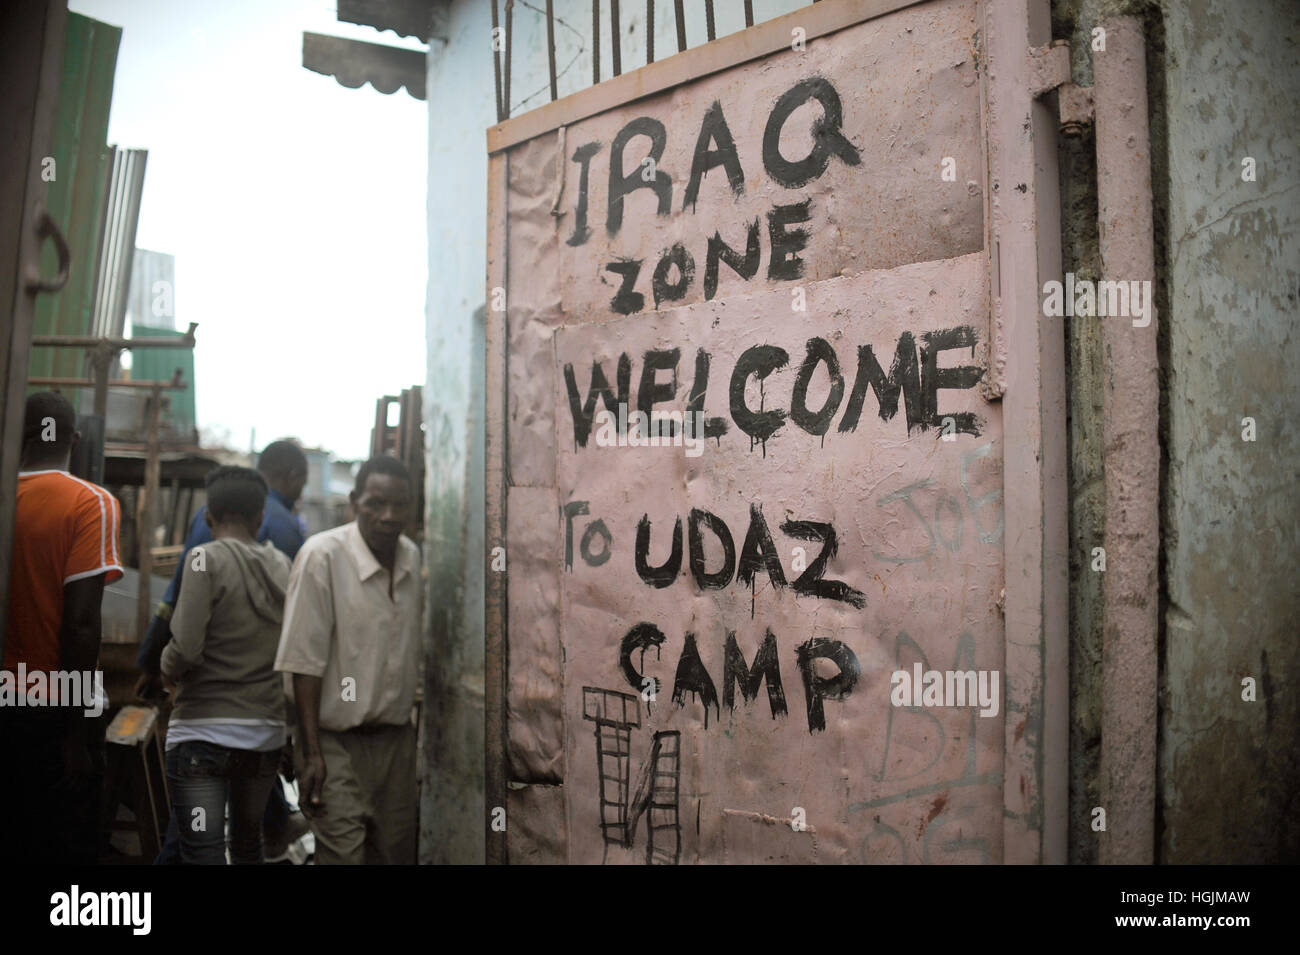 A door with the slogan 'IRAQ zone Wlcome to UDAZ camp' in Lusaka, Zambia, 09 March 2016. Photo: Britta Pedersen/dpa-Zentralbild/ZB Stock Photo